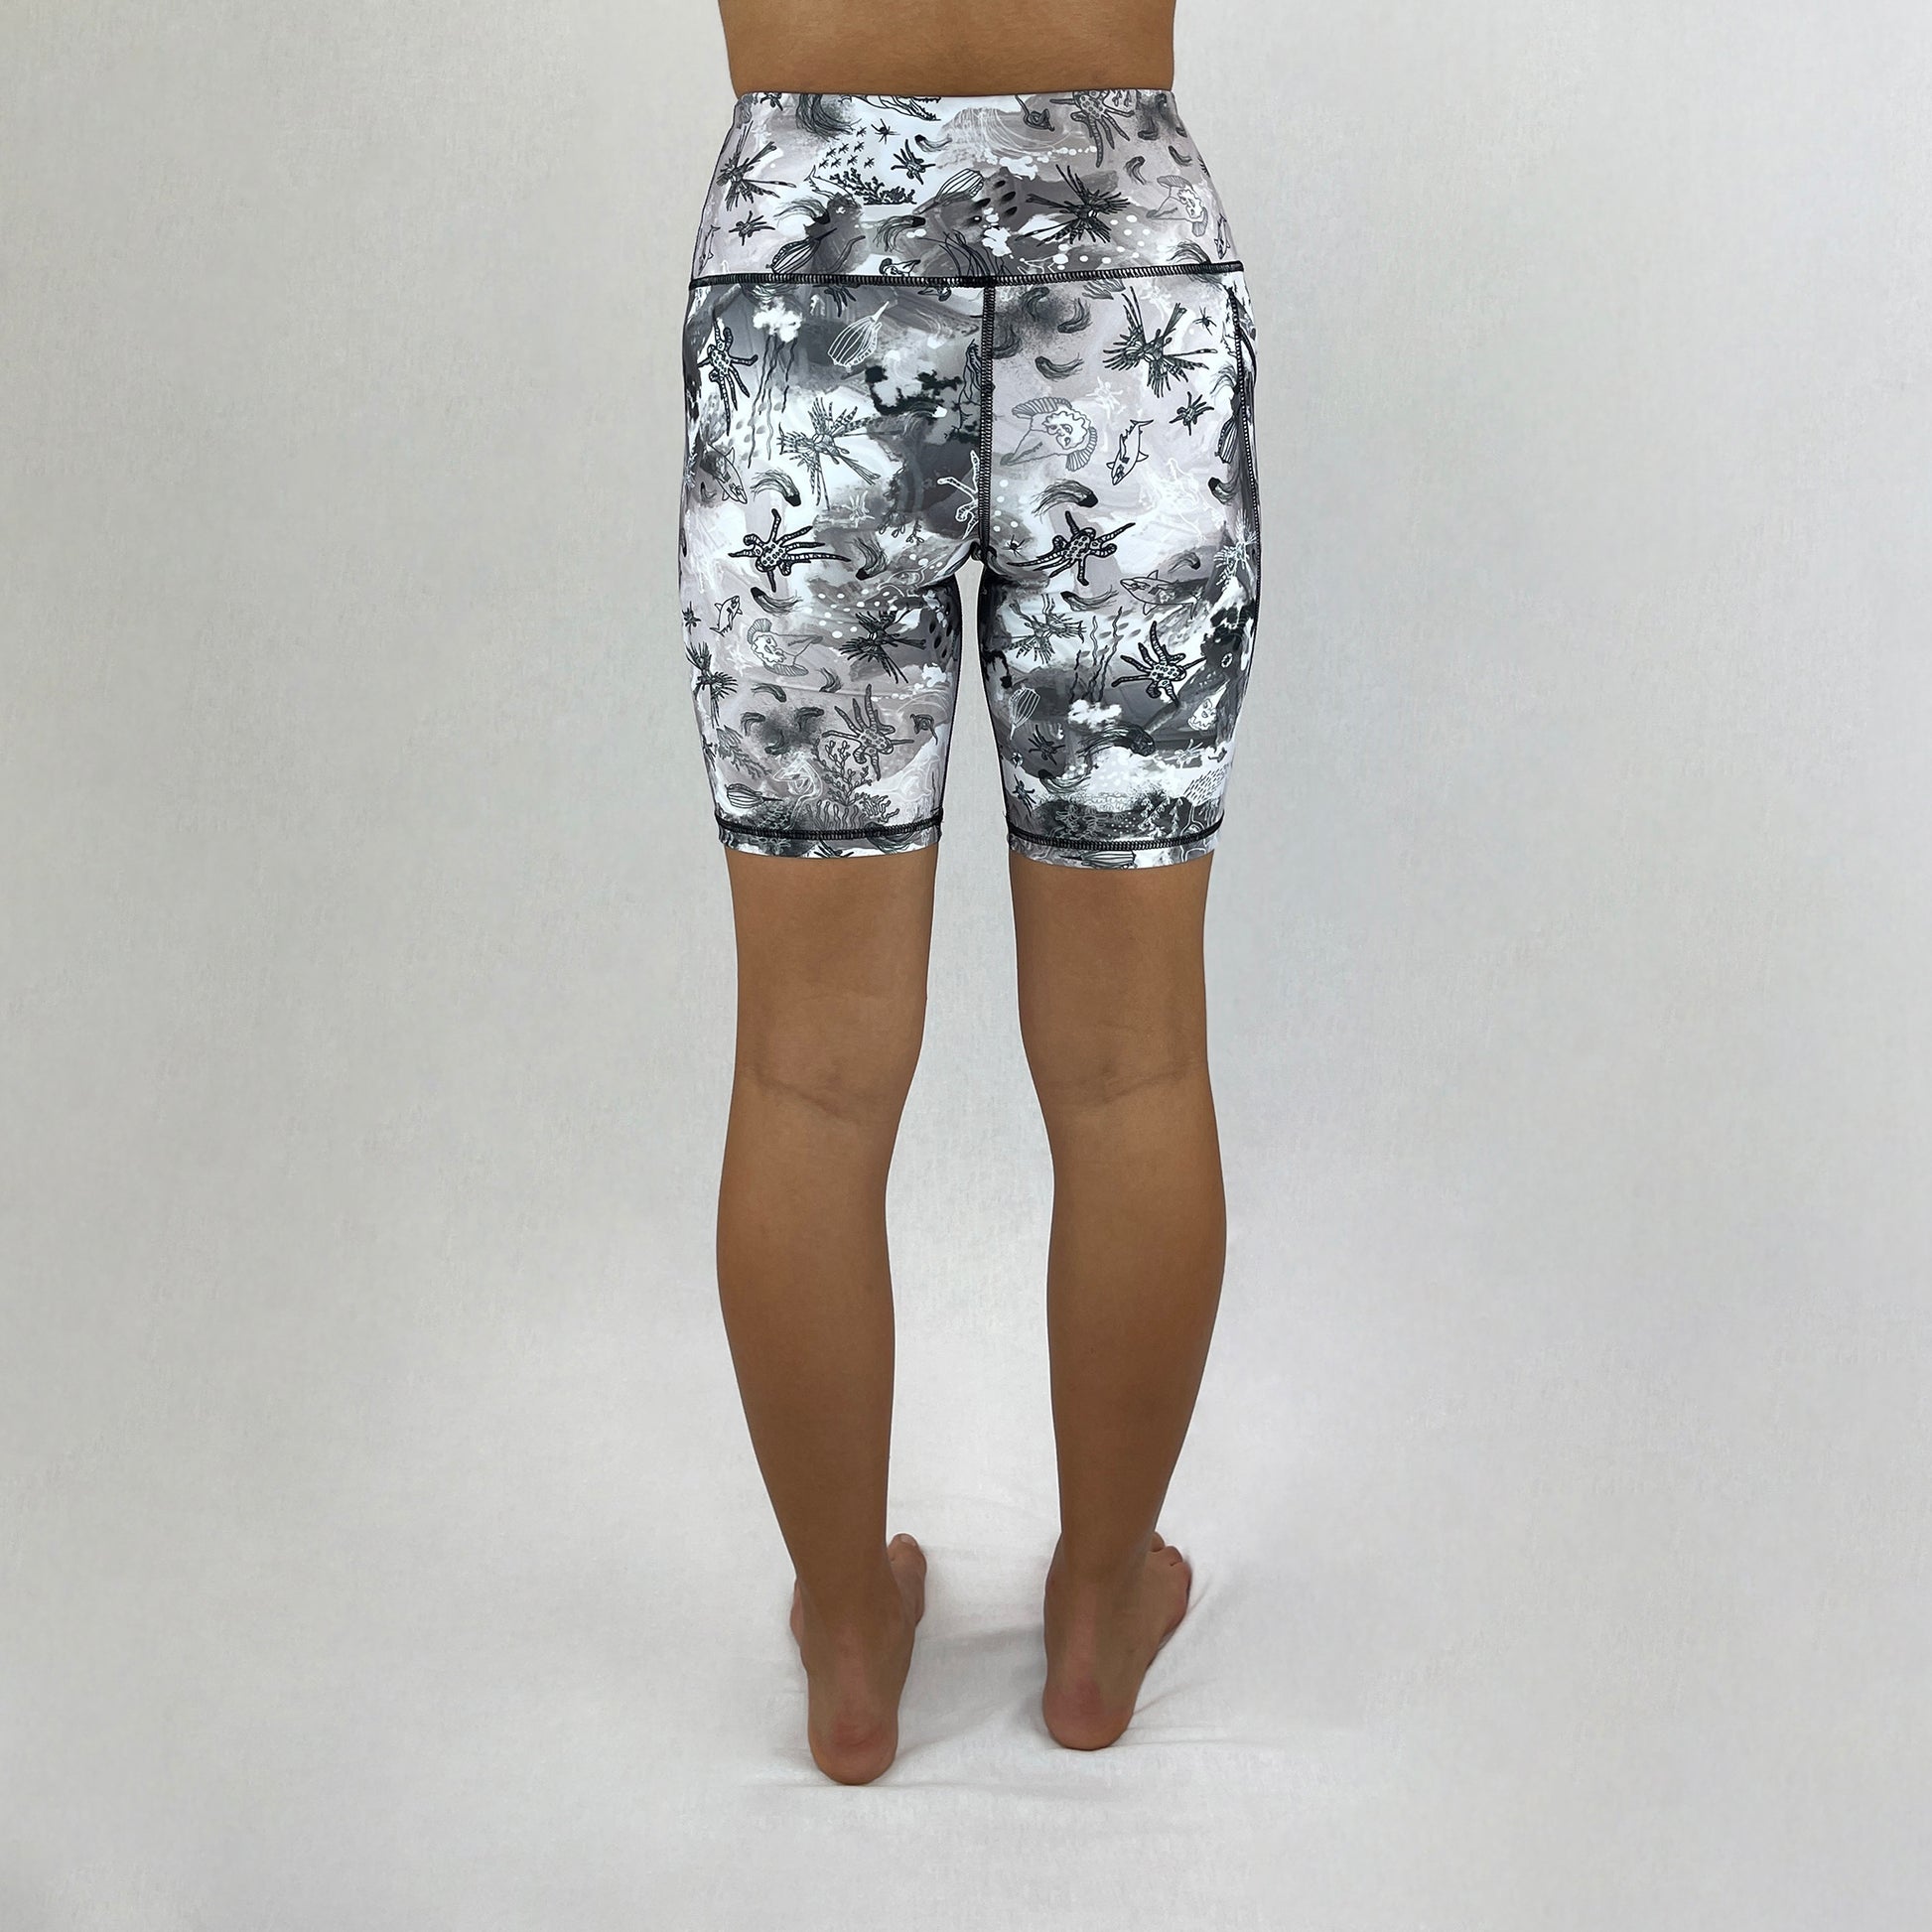 trendy bike shorts in recycled fabric made in australia - Killer - back